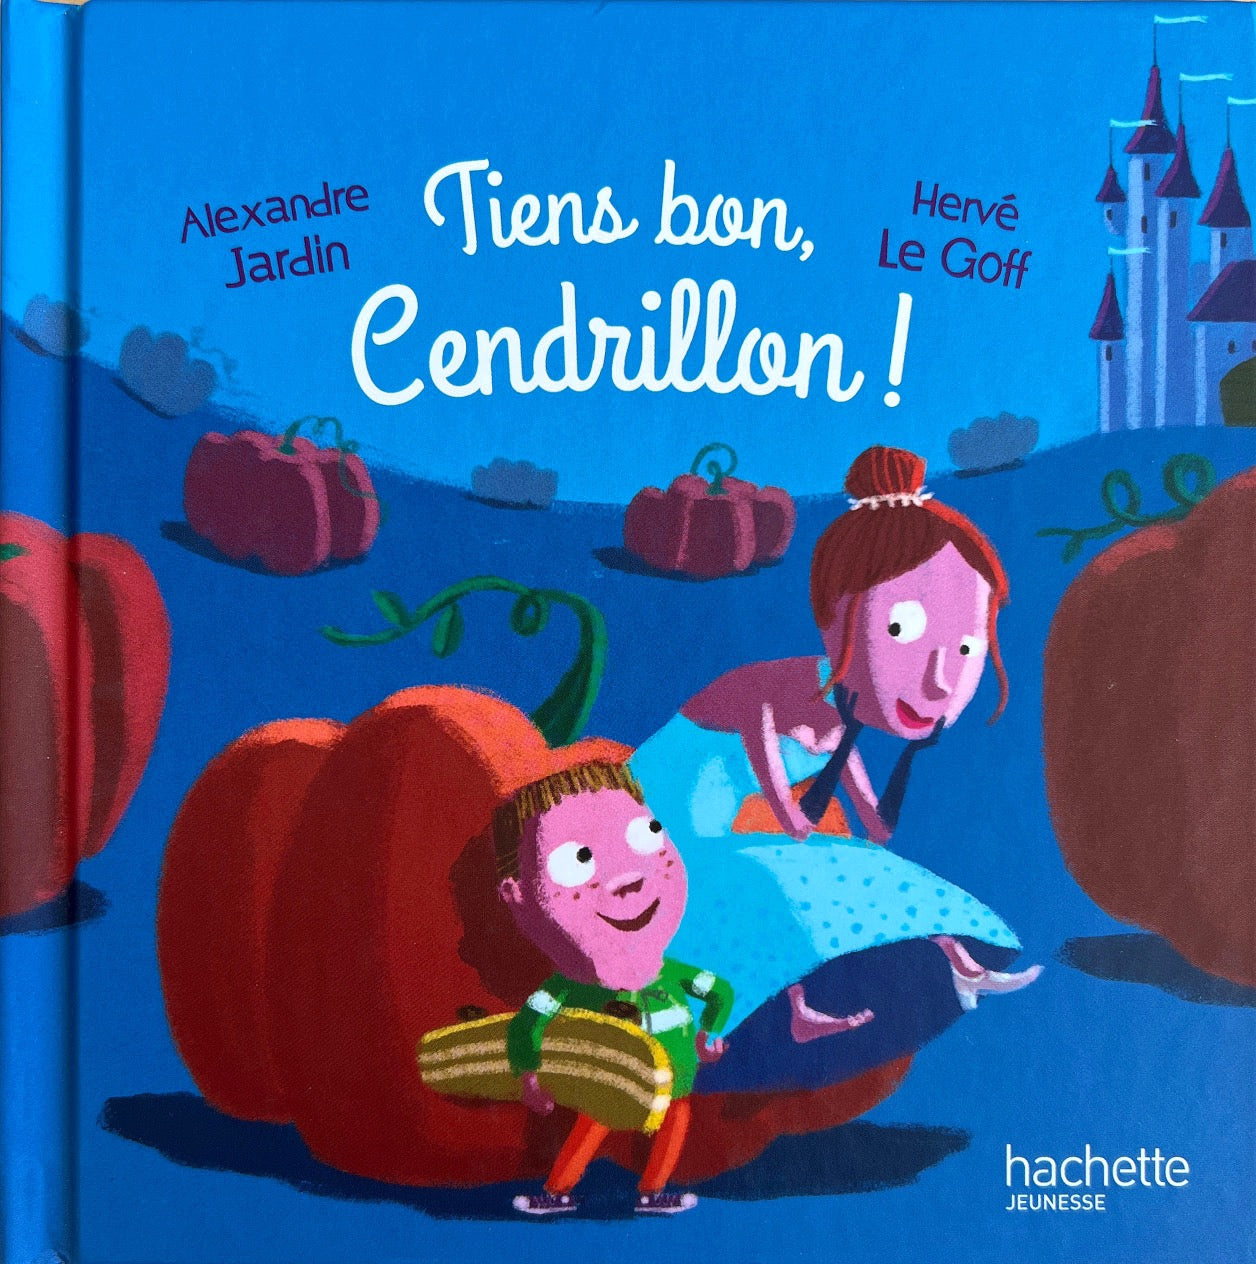 Tiens bon, Cendrillon by Alexandre Jardin- Book in French – My